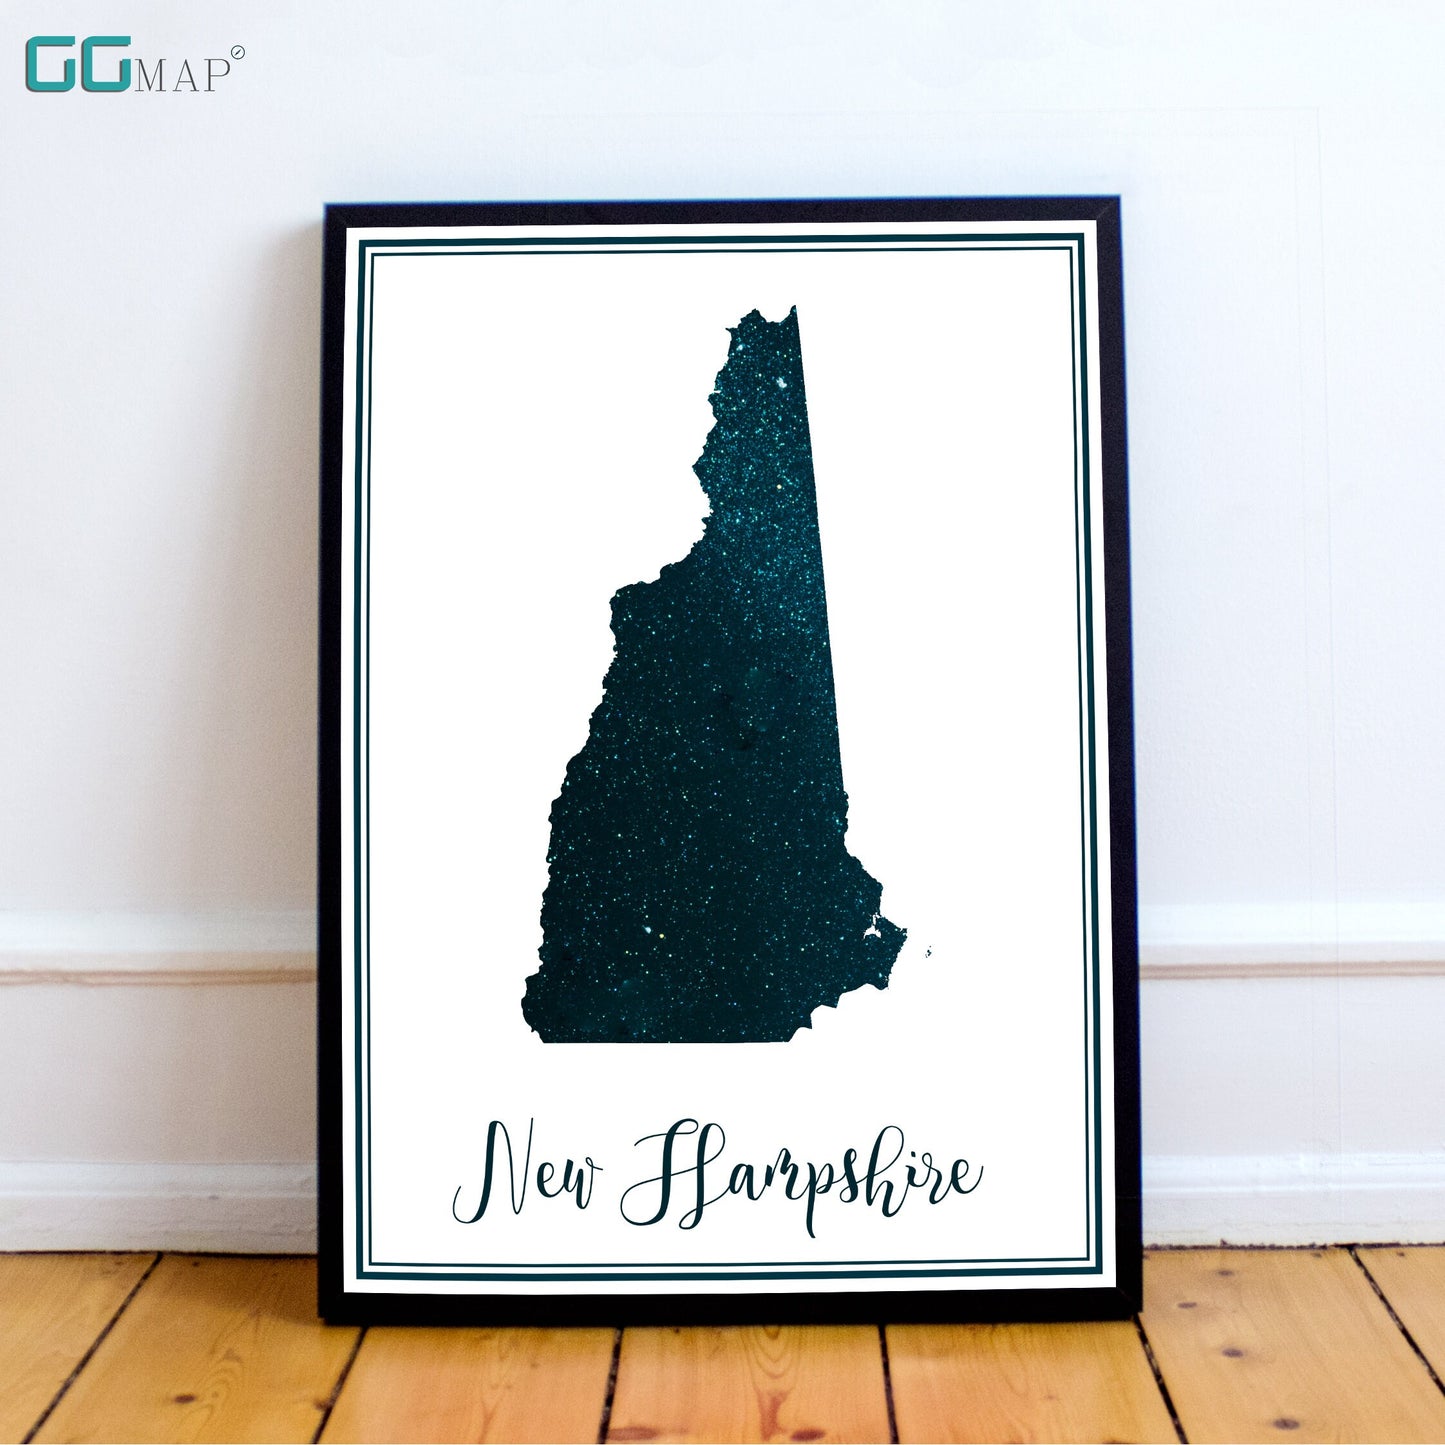 NEW HAMPSHIRE map - New Hampshire stars map - Home Decor - Wall decor - Office map - New Hampshire gift - GeoGIS studio